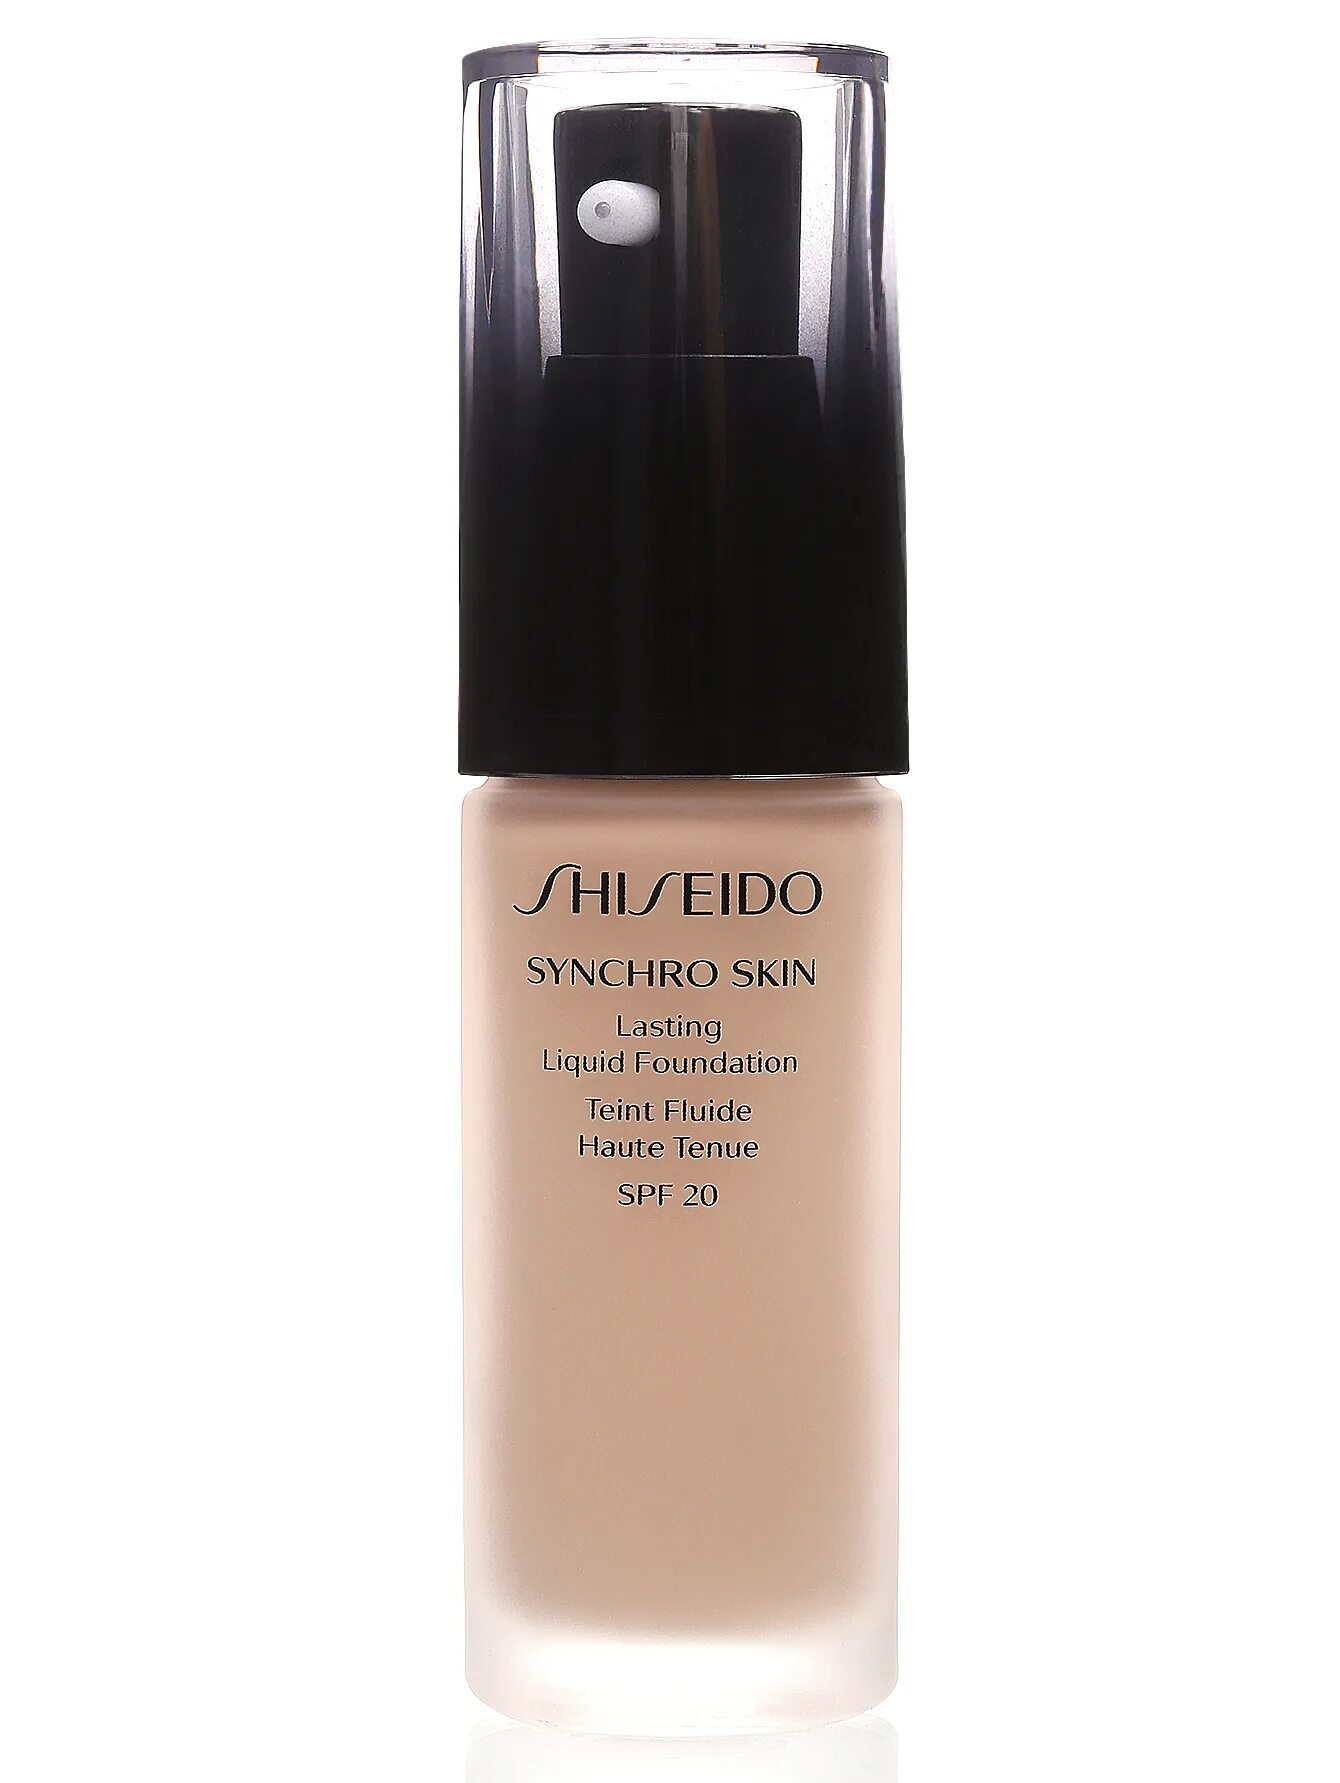 Тональный крем Shiseido Synchro Skin Glow. Тональный Shiseido Synchro Skin тон Neutral 1. Шисейдо тональный Роуз 2. Тональный крем шисейдо синхро Глов нейтрал 3. Shiseido synchro skin lifting